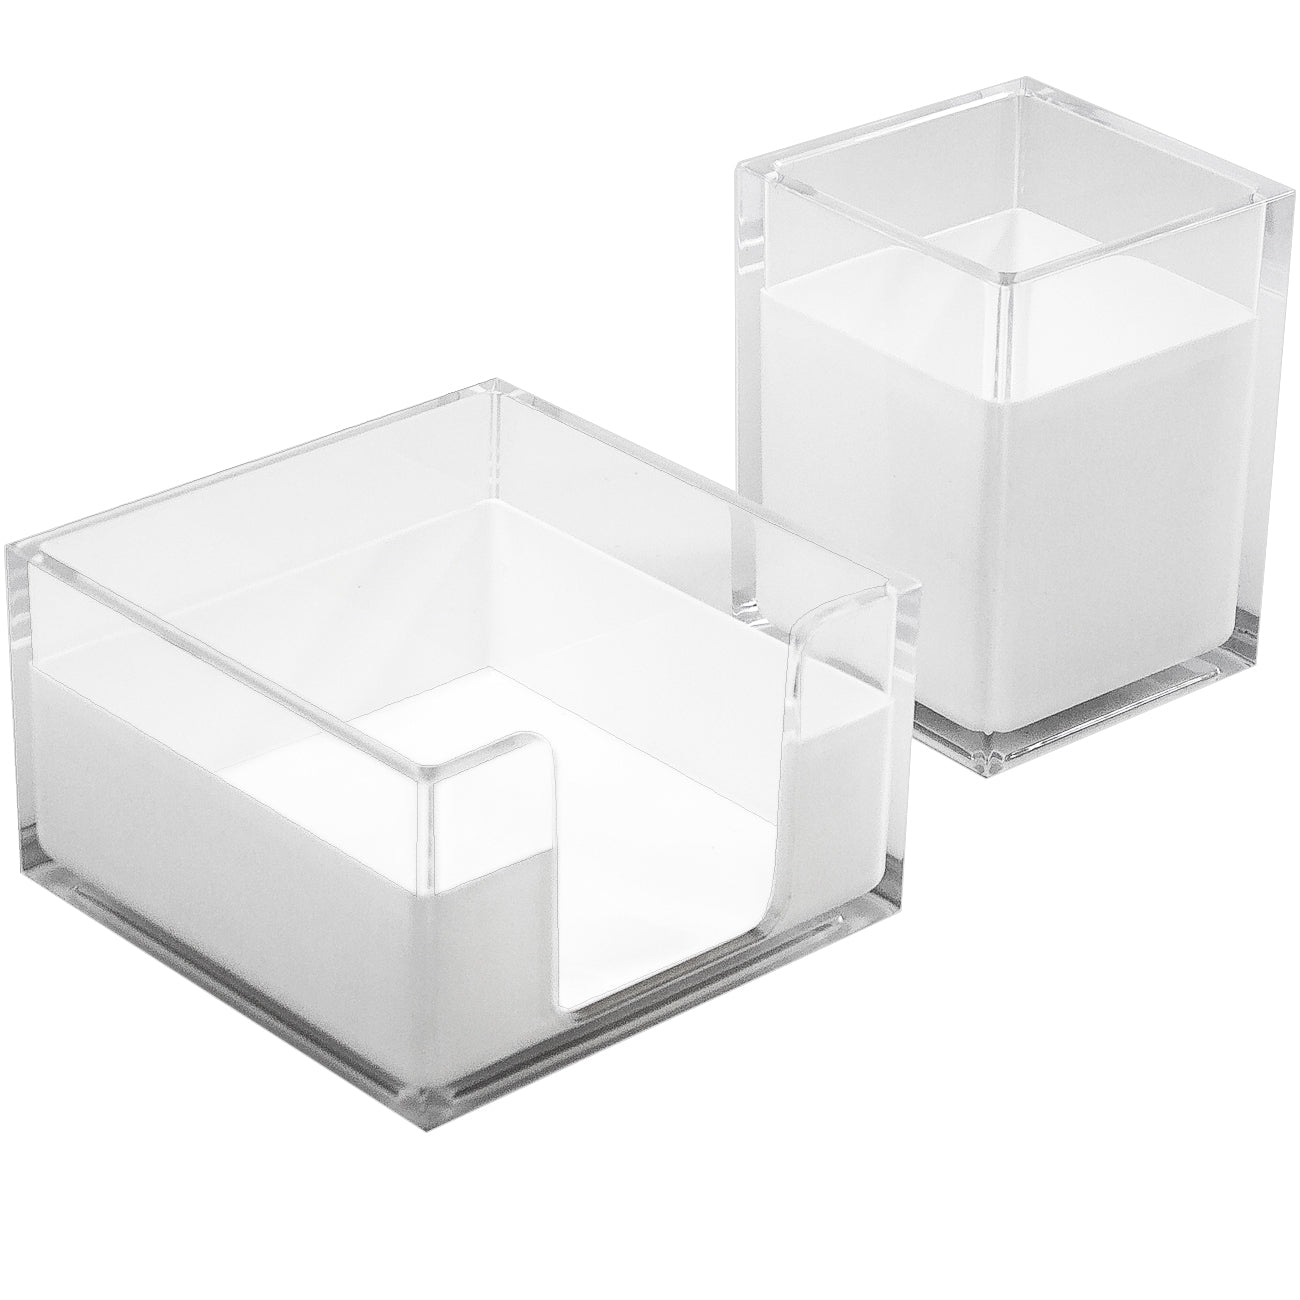 Acrylic Desk Organizer Set (3 Piece) - Sorbus Home